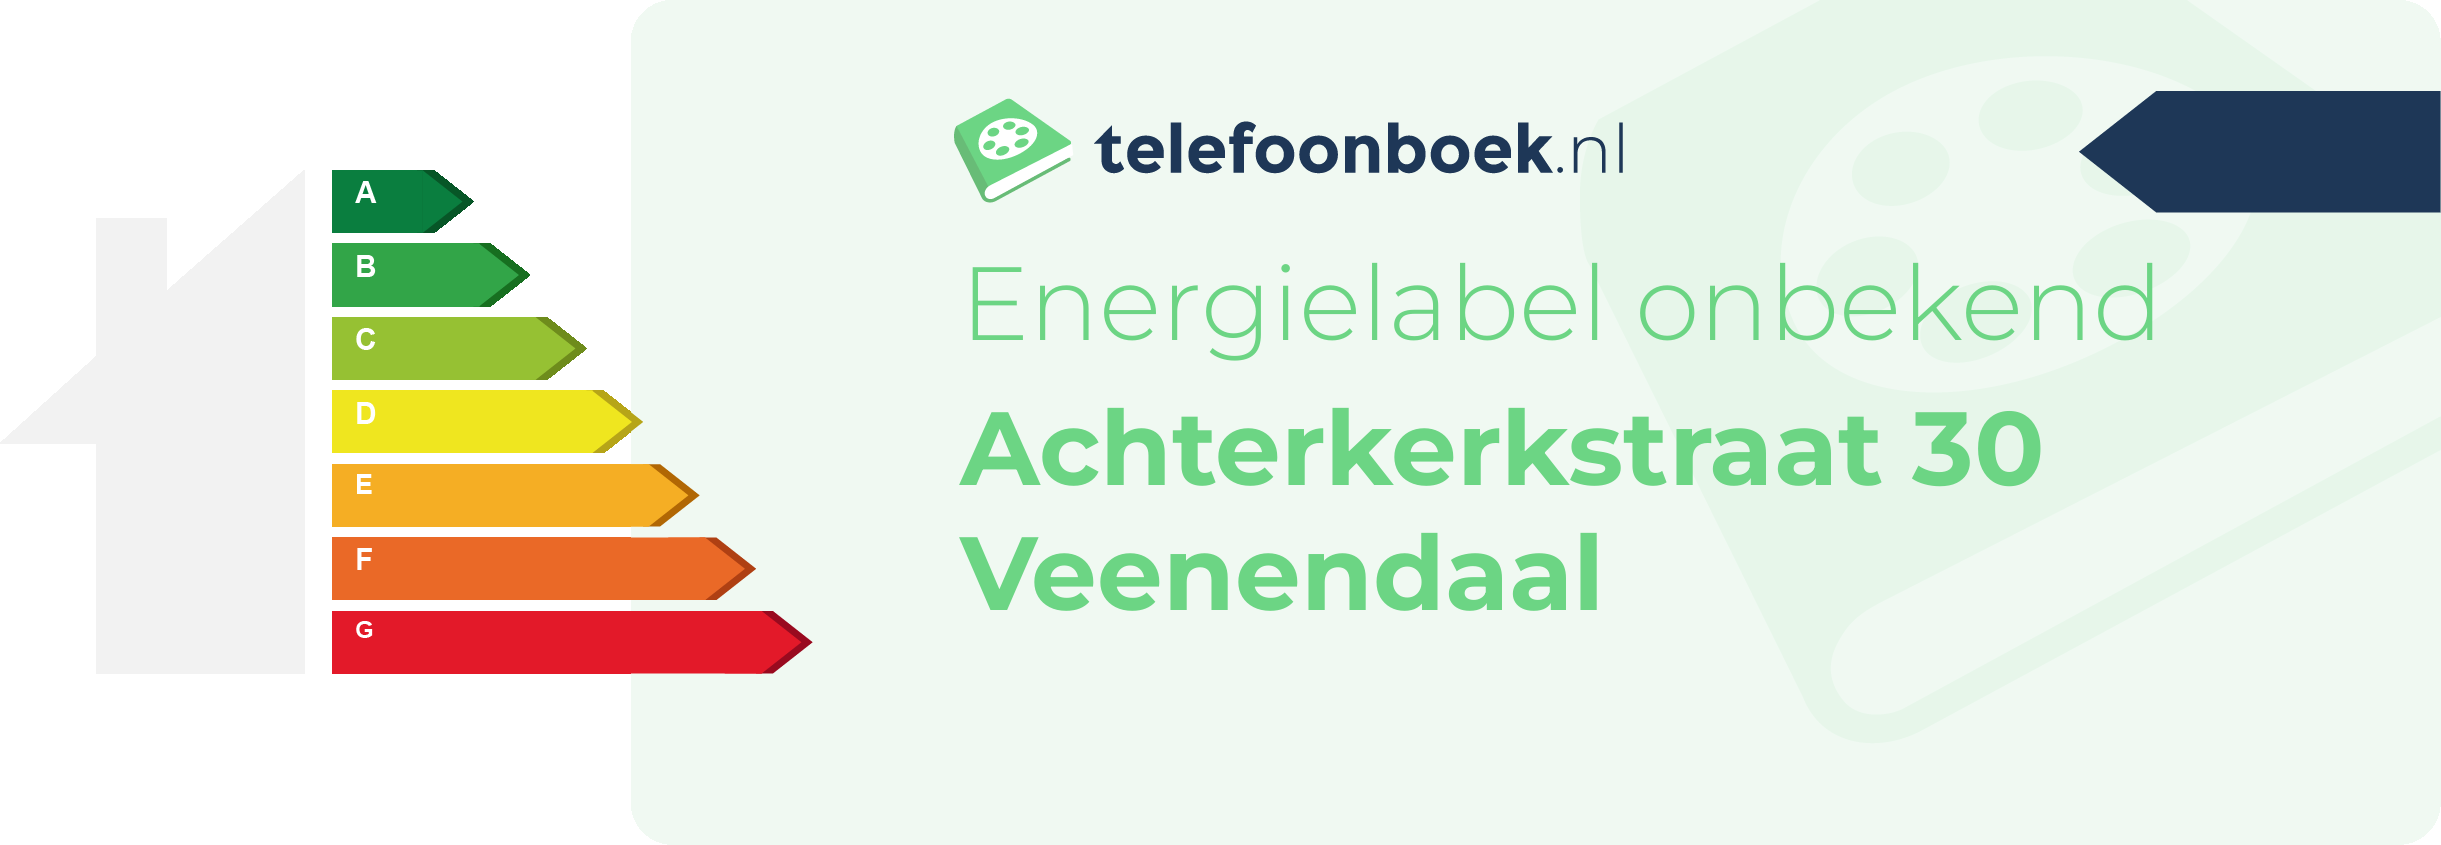 Energielabel Achterkerkstraat 30 Veenendaal